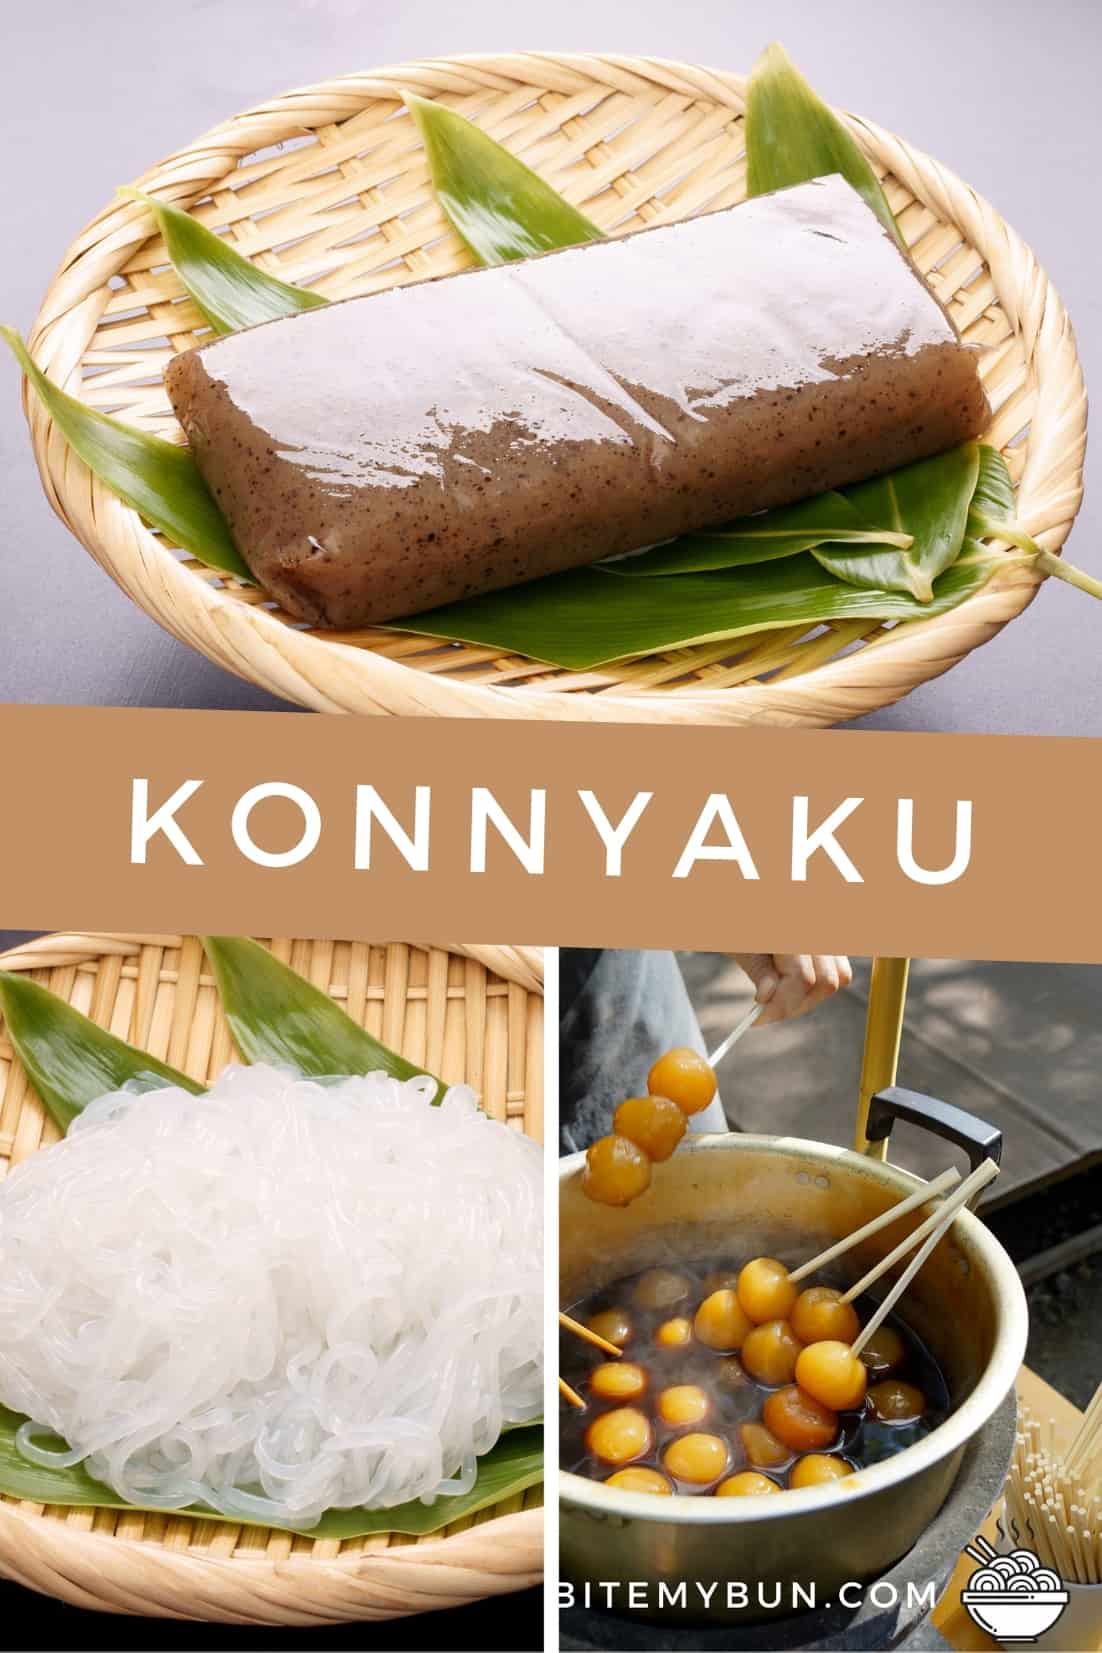 Different types of Konnyaku